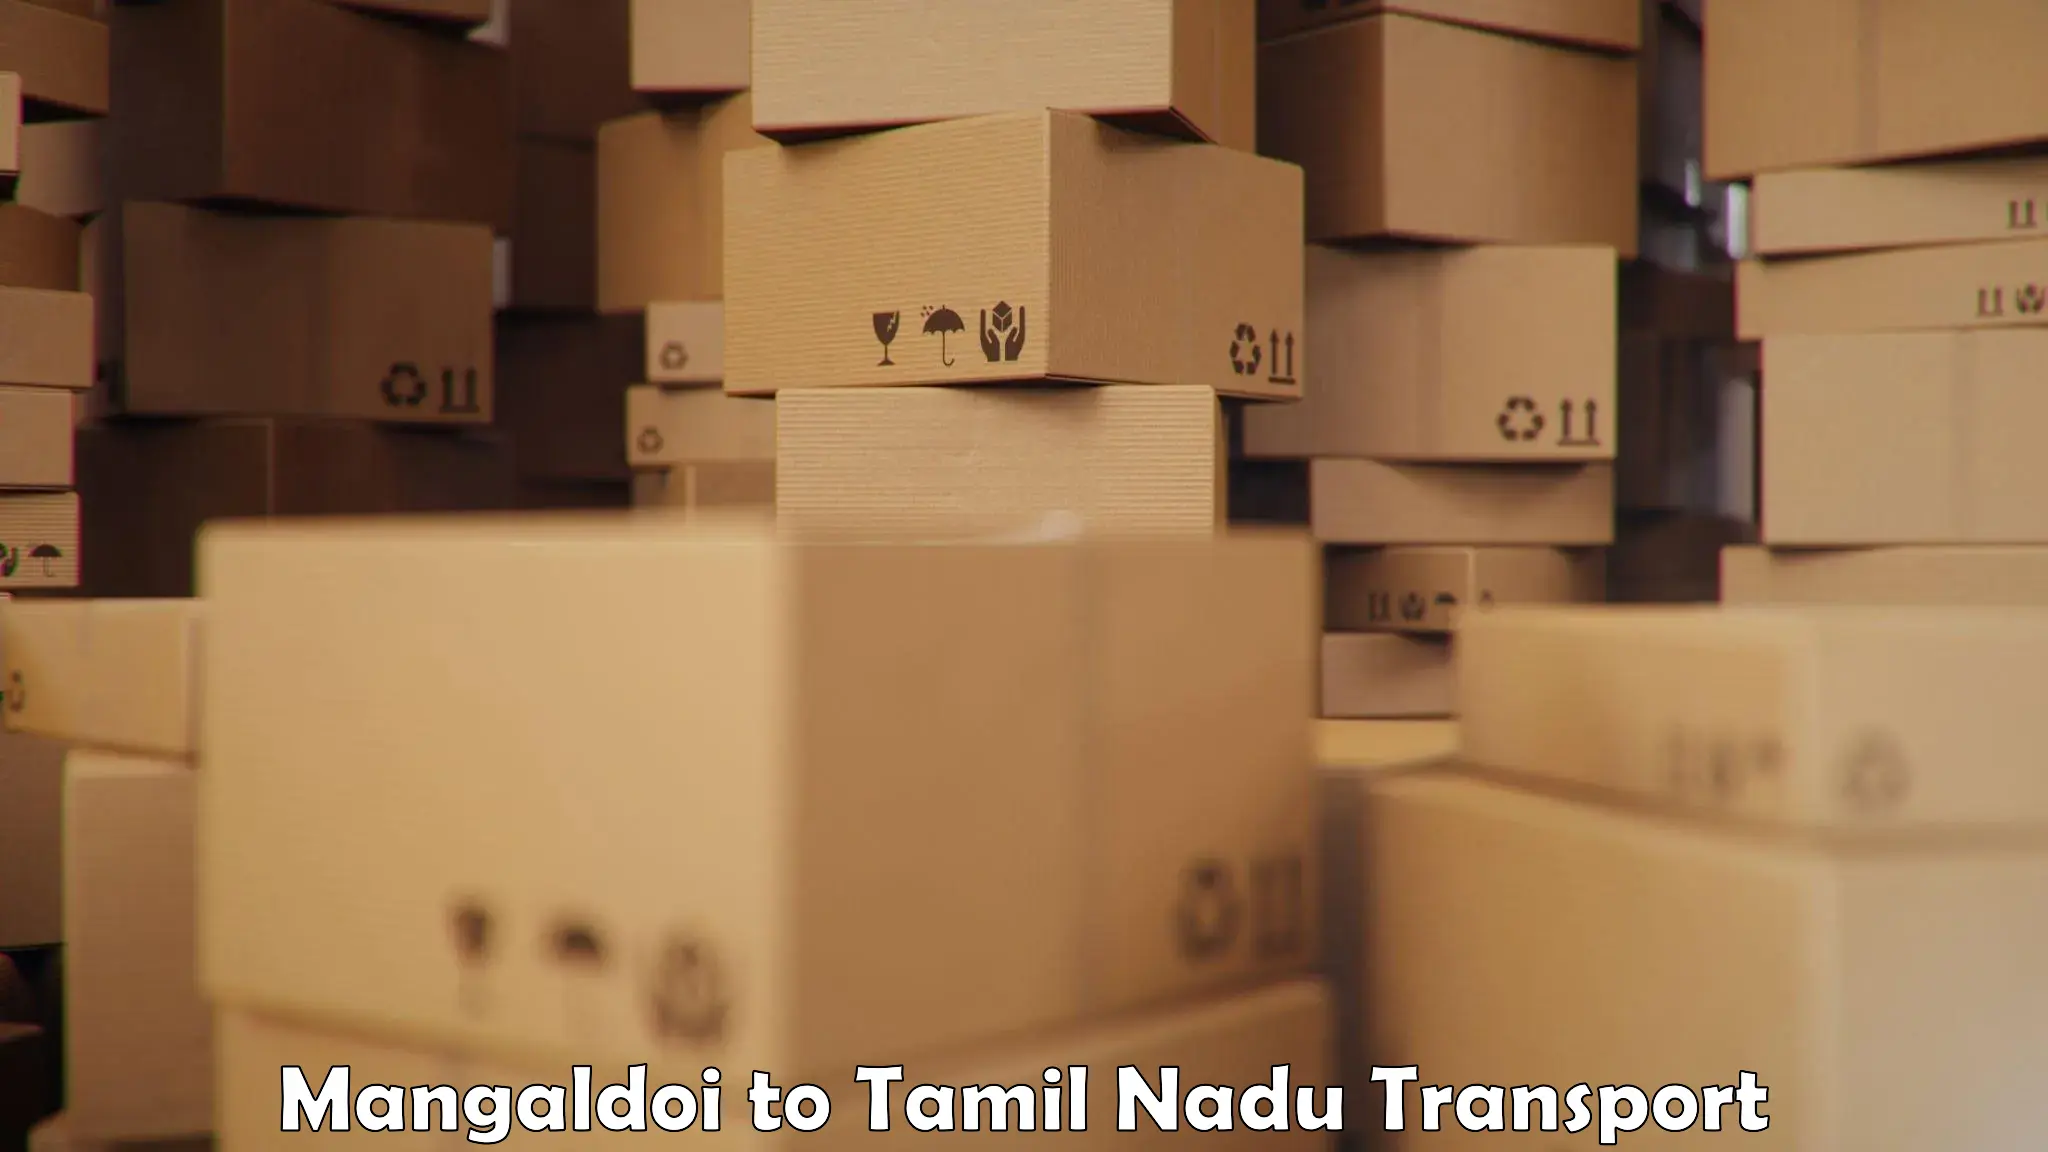 Daily transport service Mangaldoi to Chennai Port